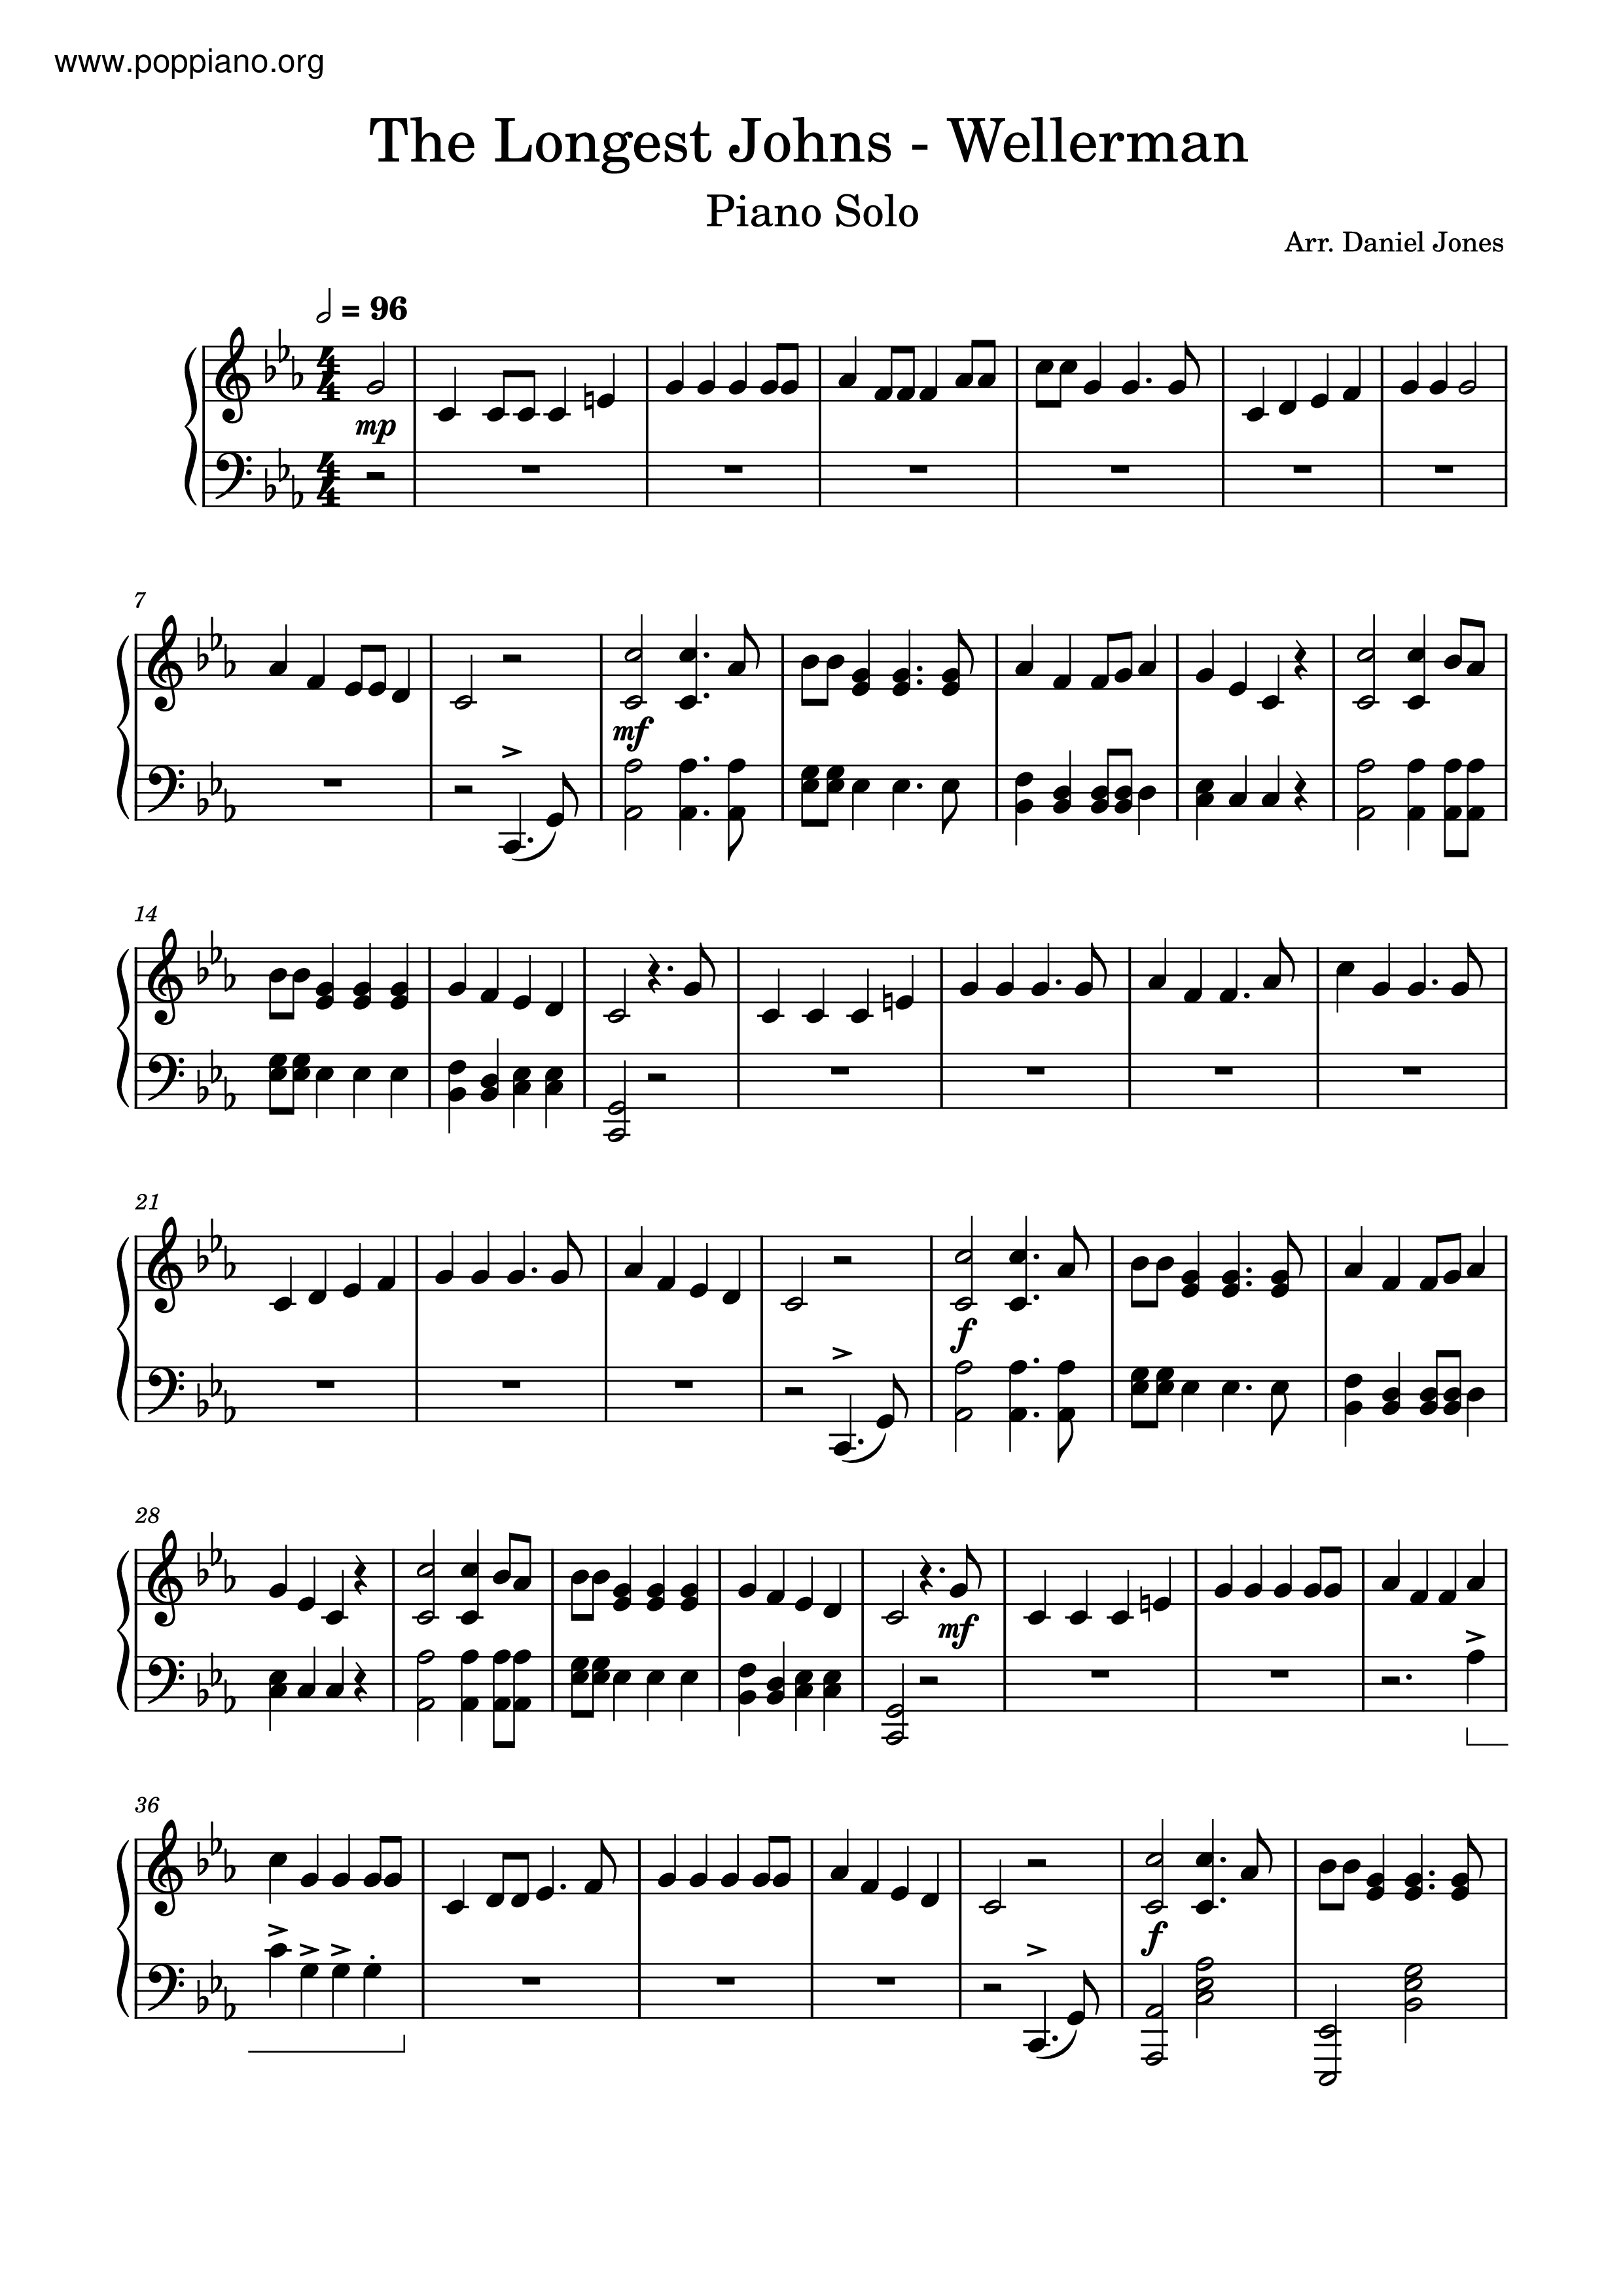 The Wellerman琴谱